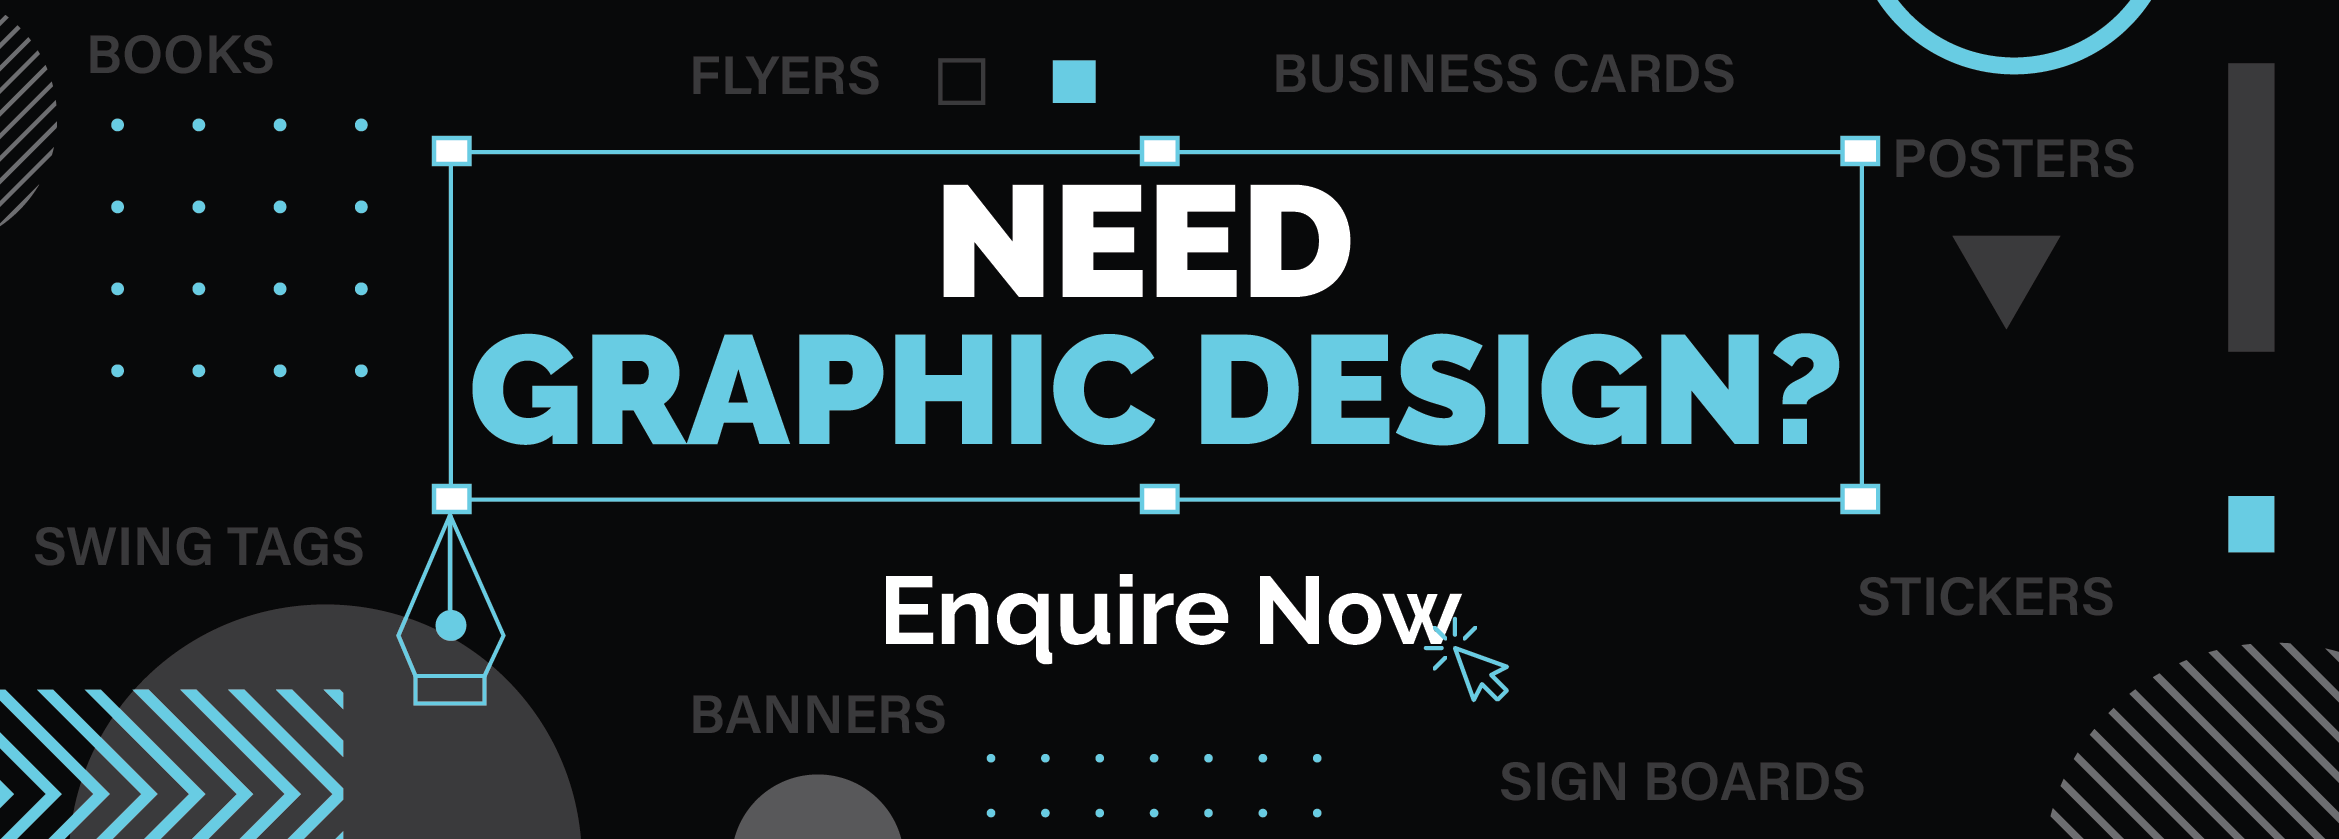 Need Graphic Design